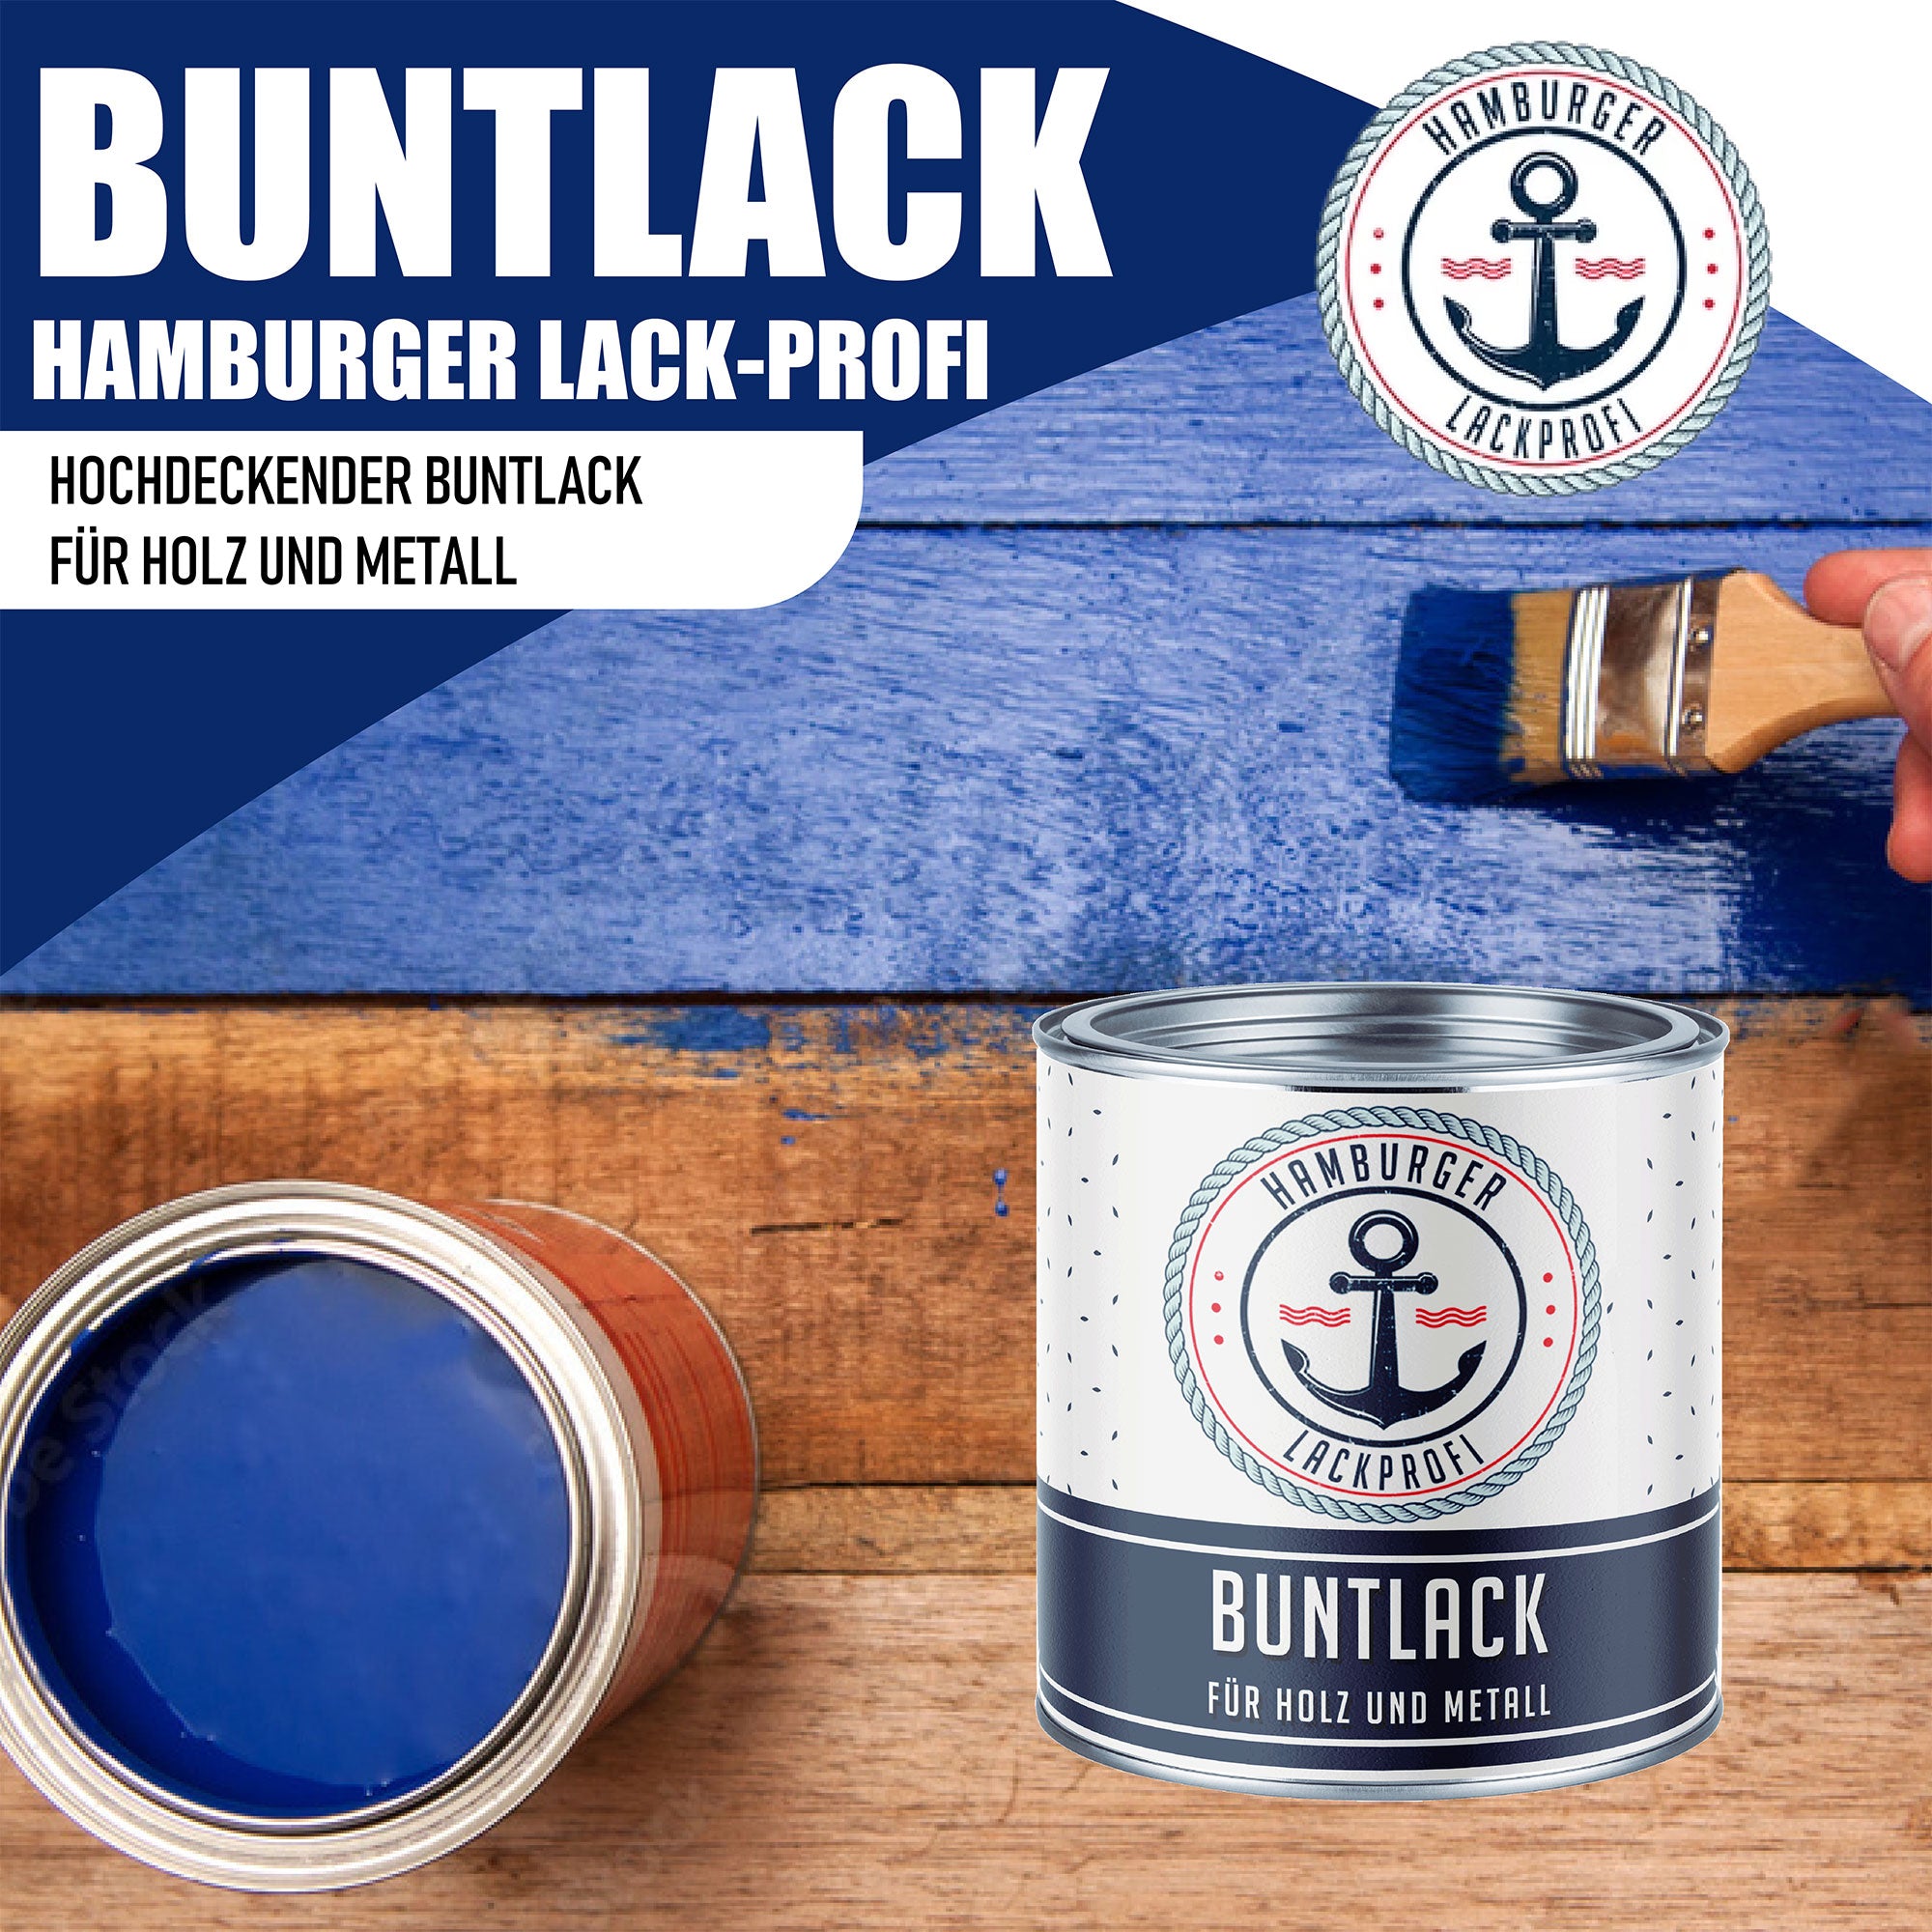 Hamburger Lack-Profi Buntlack Rapsgelb RAL 1021 - Robuster Kunstharzlack